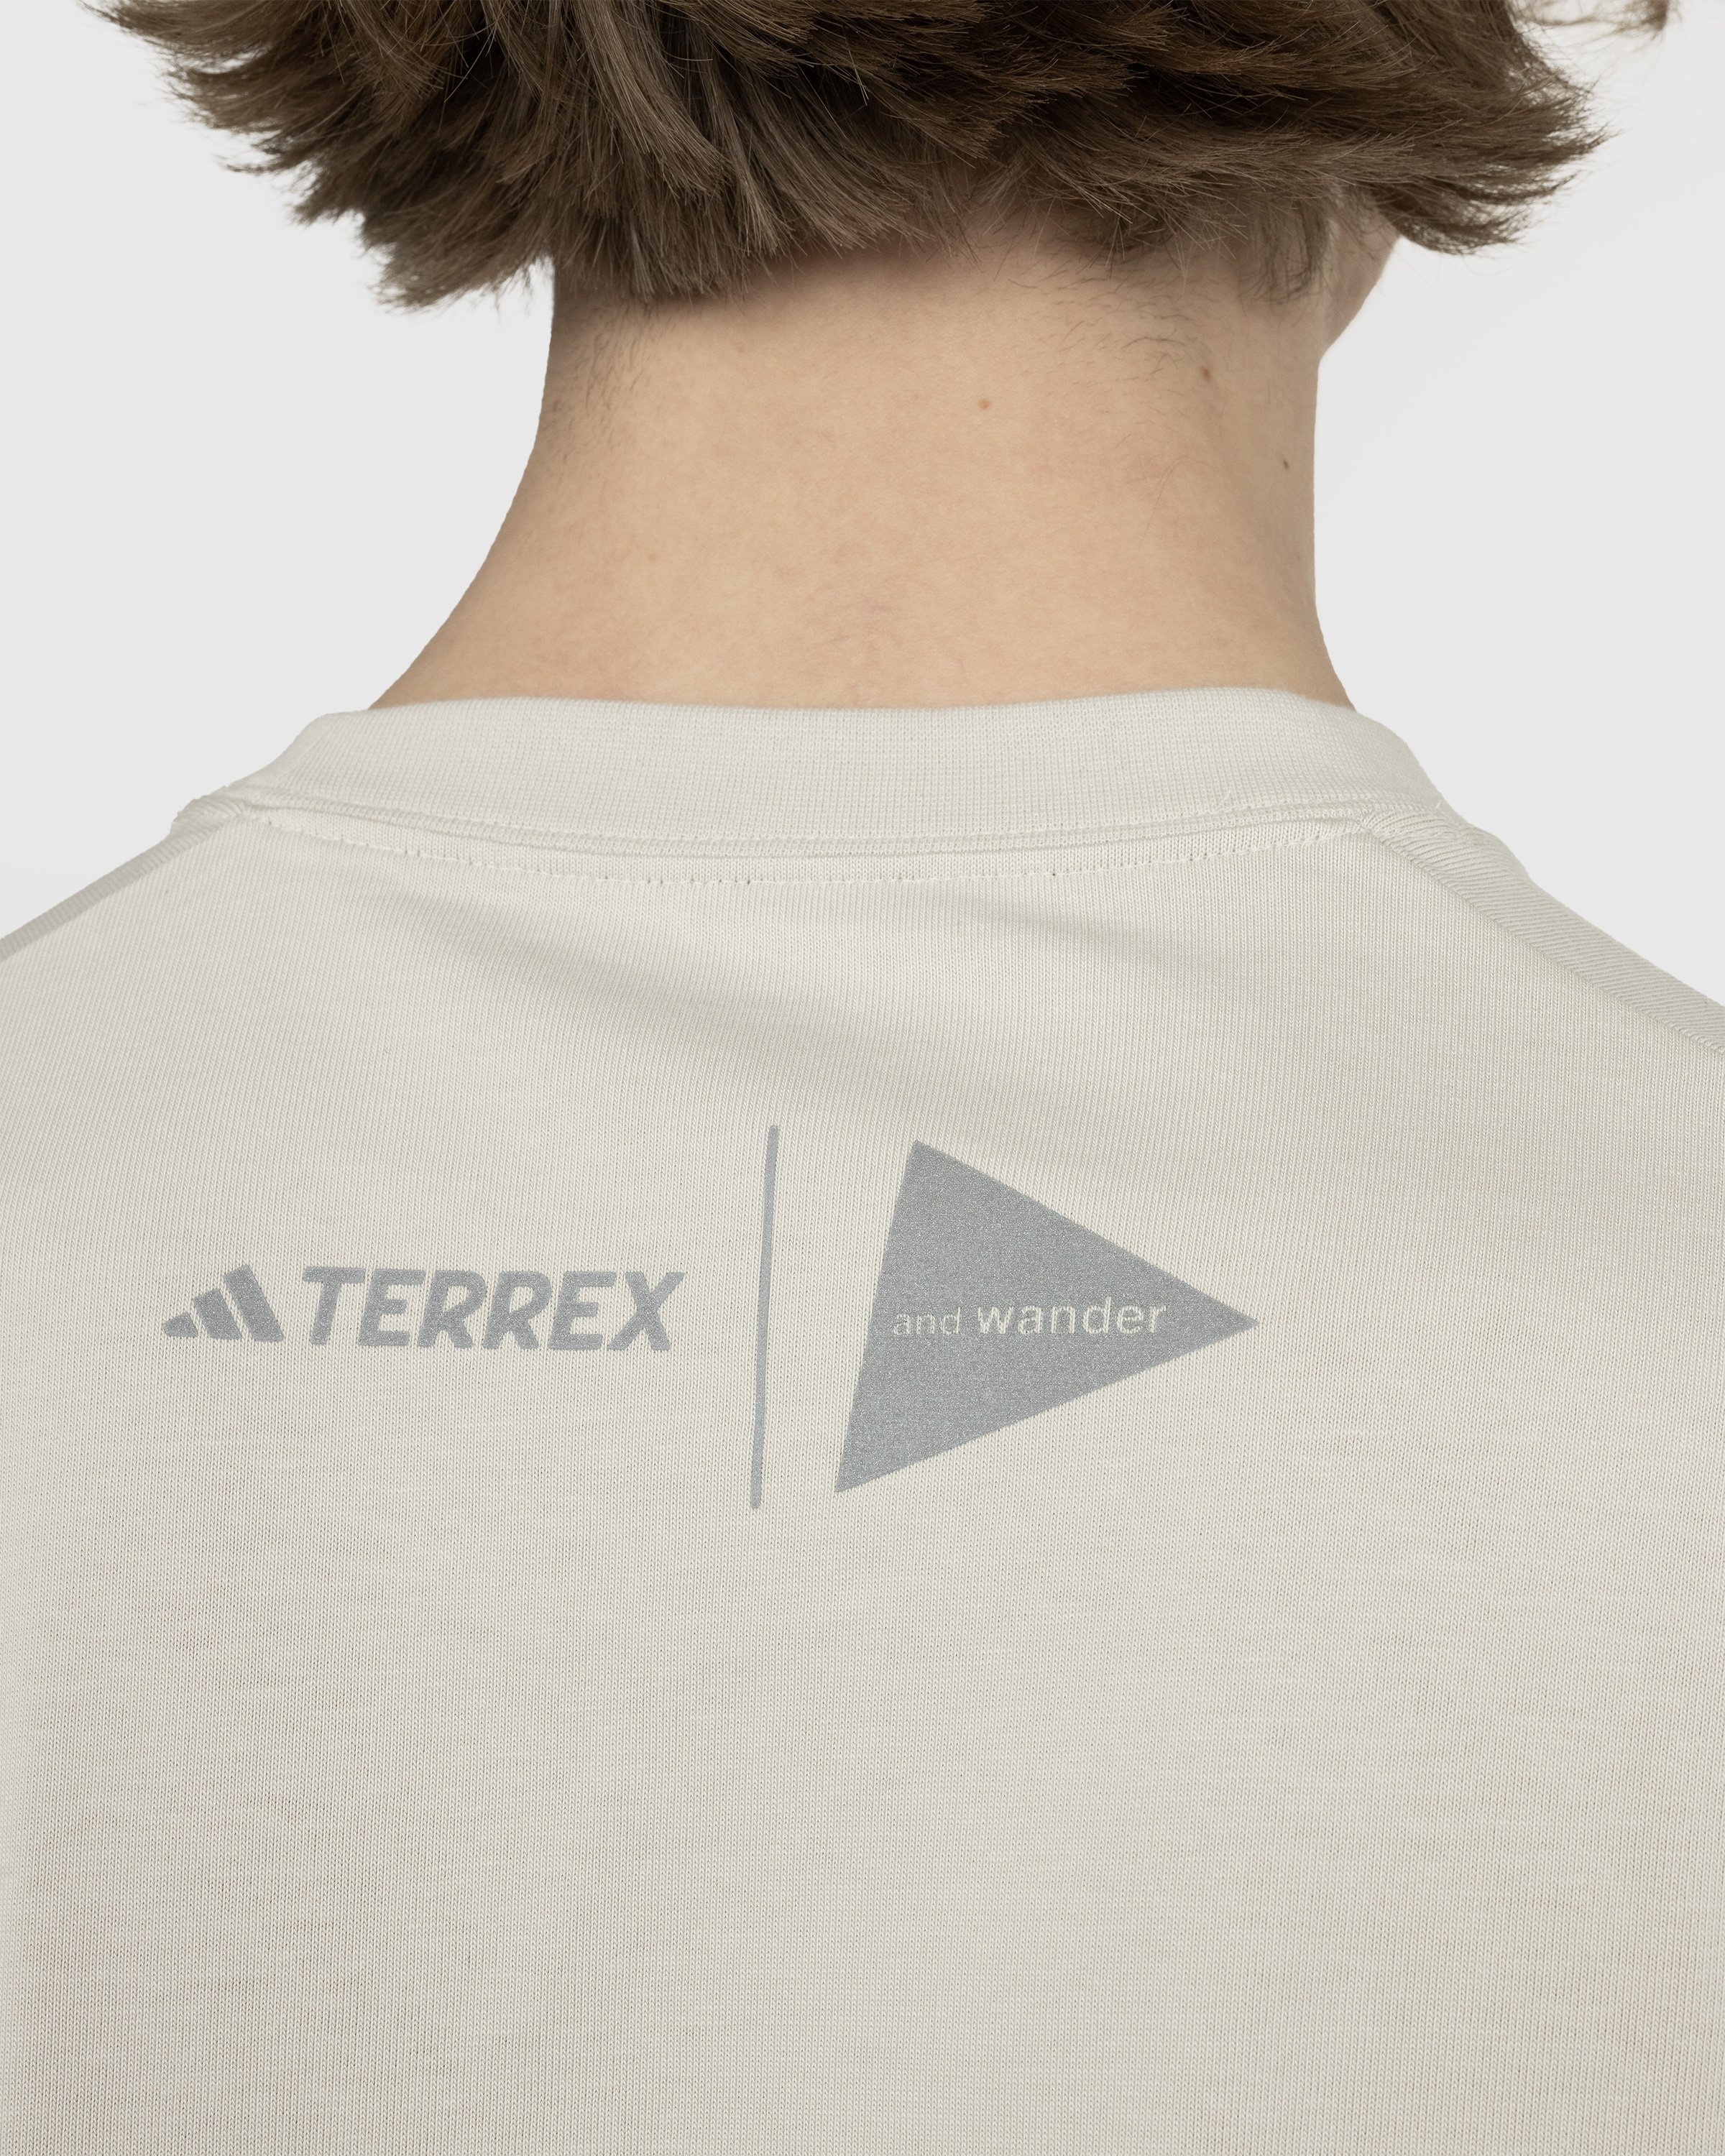 adidas Terrex x And Wander – AWD Graphic T-Shirt Alumina | Highsnobiety Shop